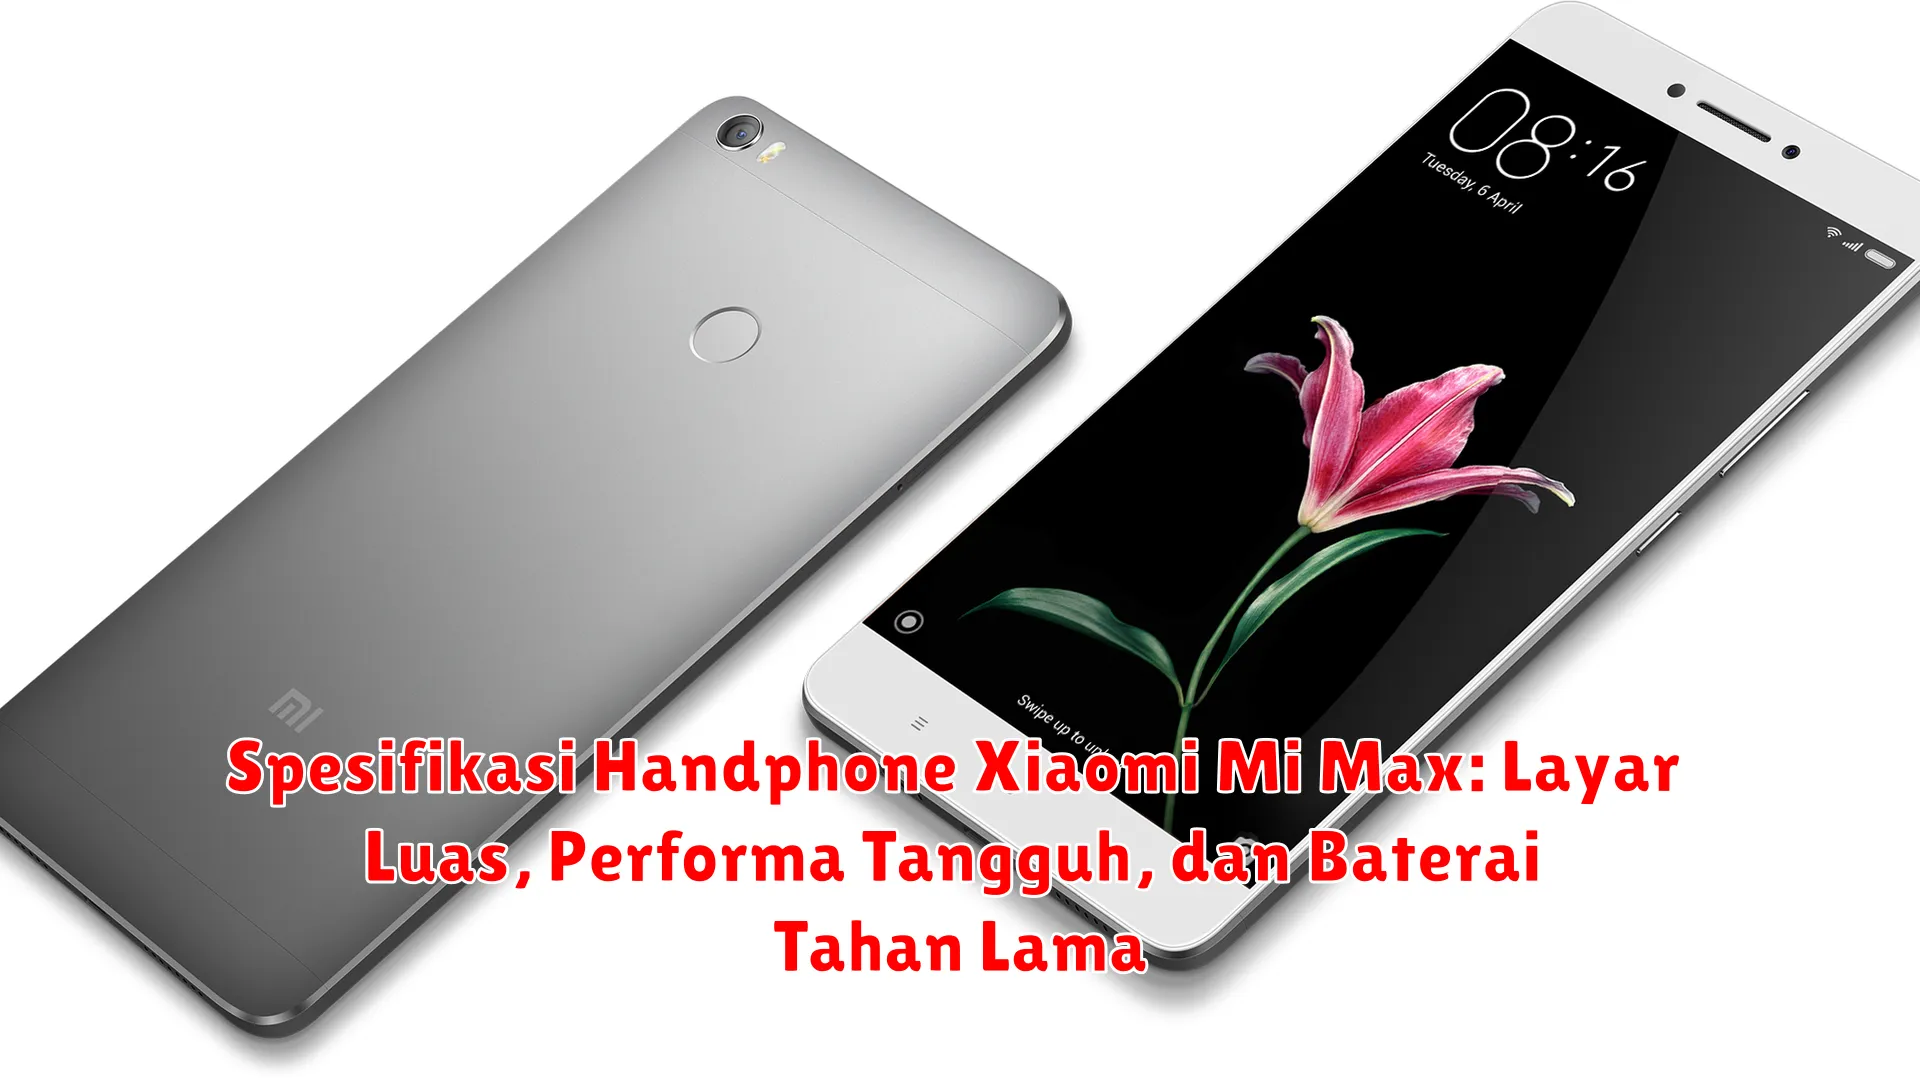 Spesifikasi Handphone Xiaomi Mi Max: Layar Luas, Performa Tangguh, dan Baterai Tahan Lama